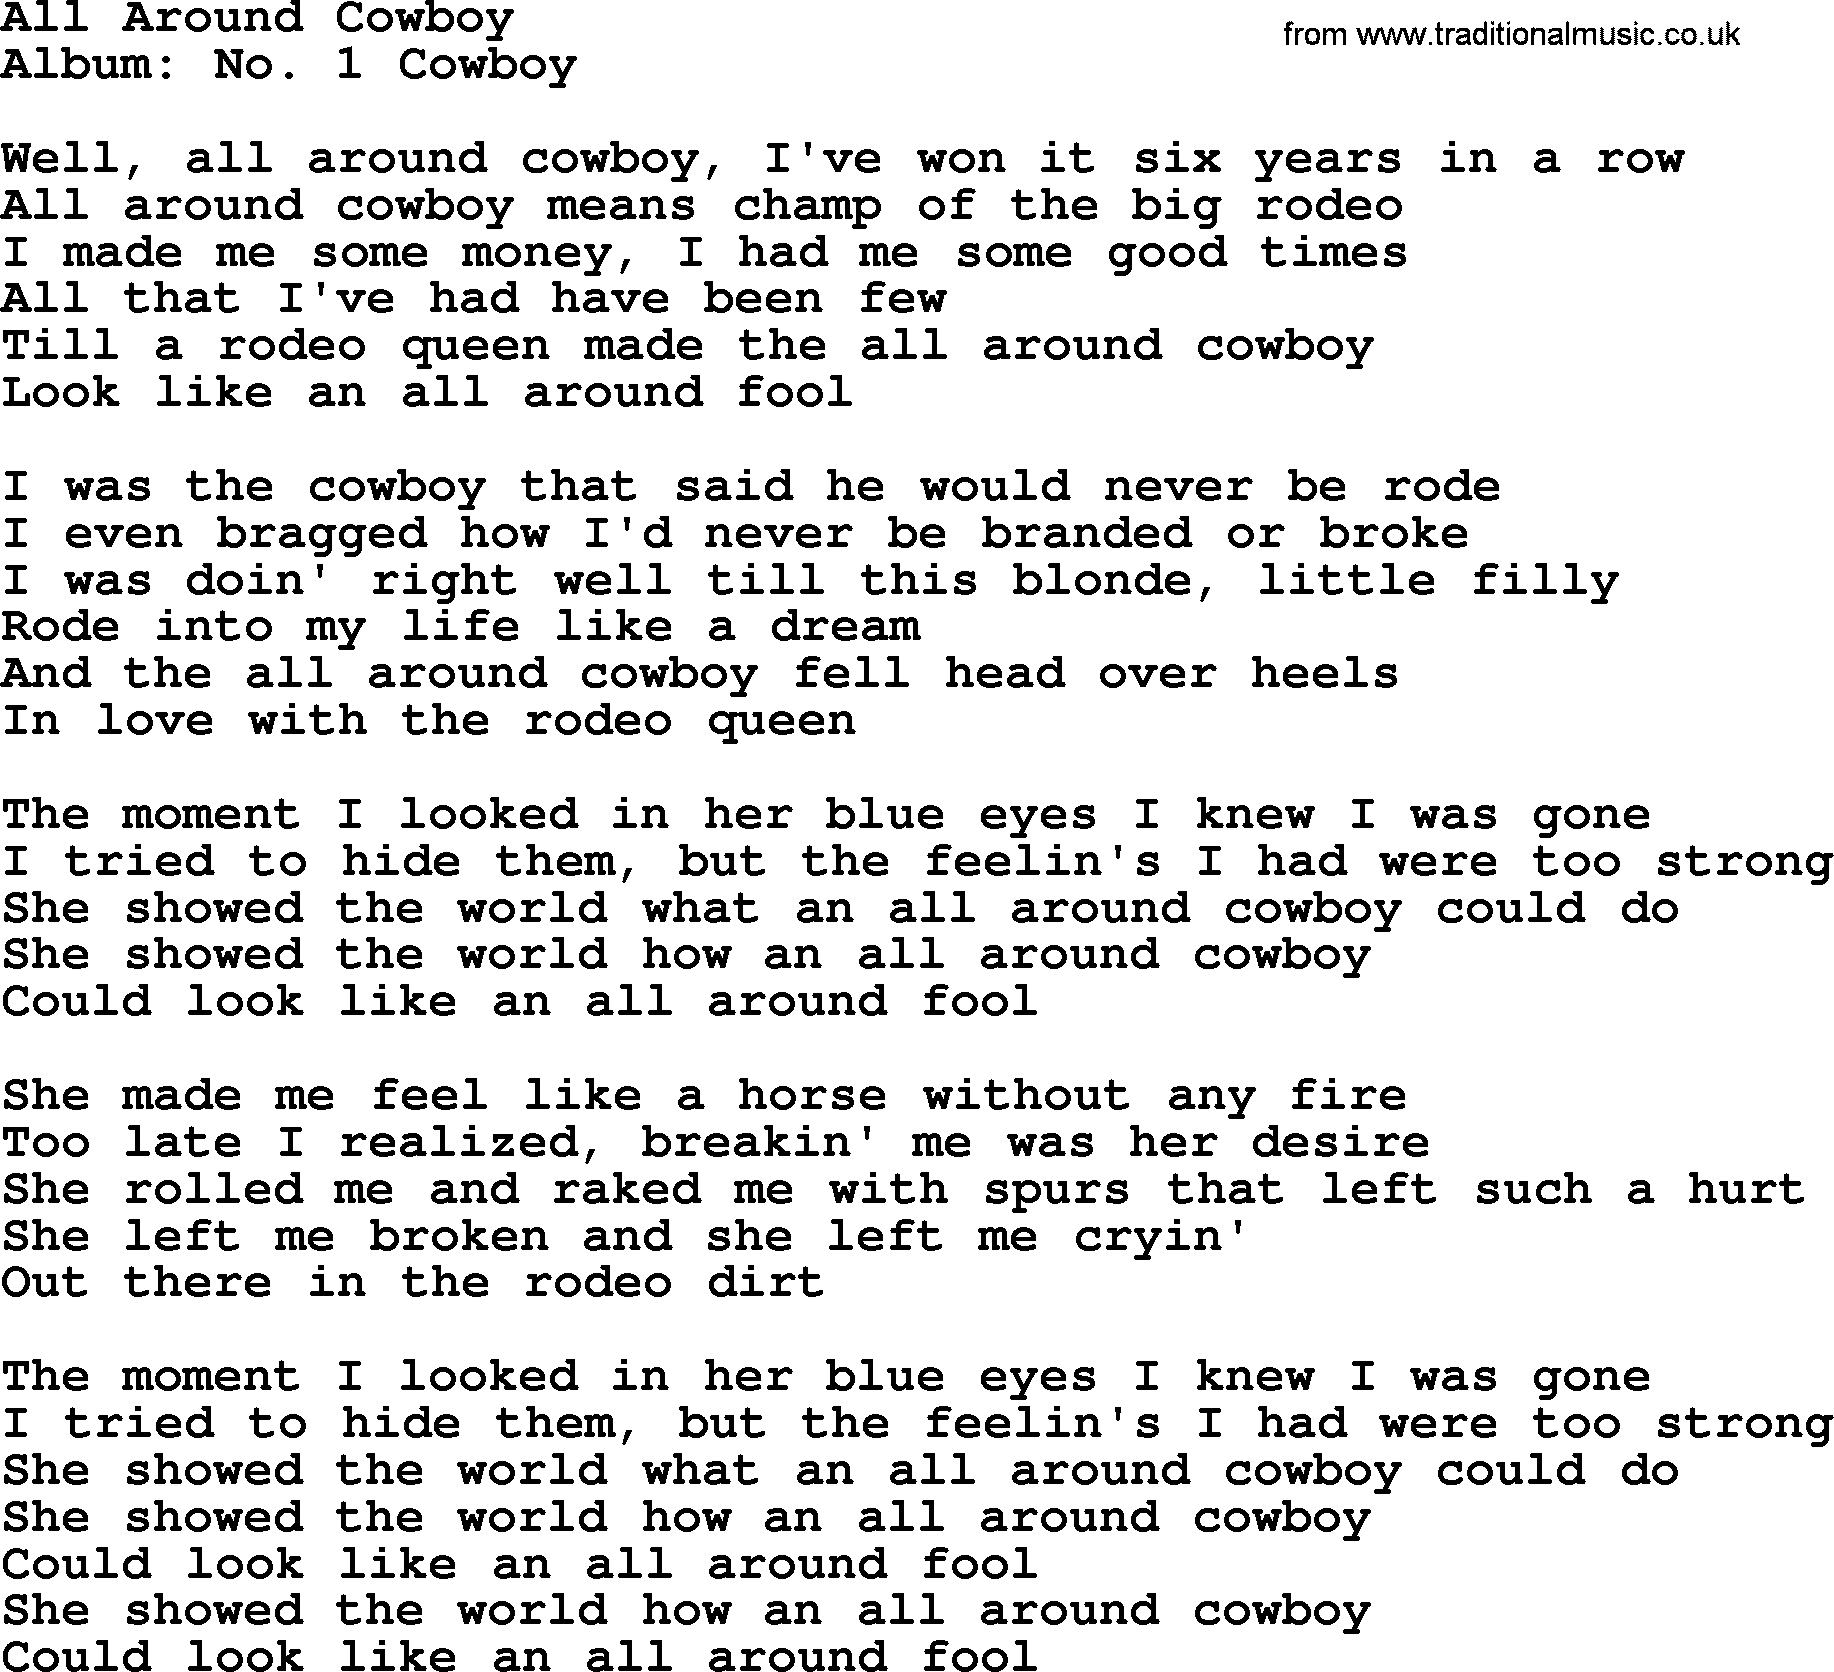 Marty Robbins song: All Around Cowboy, lyrics